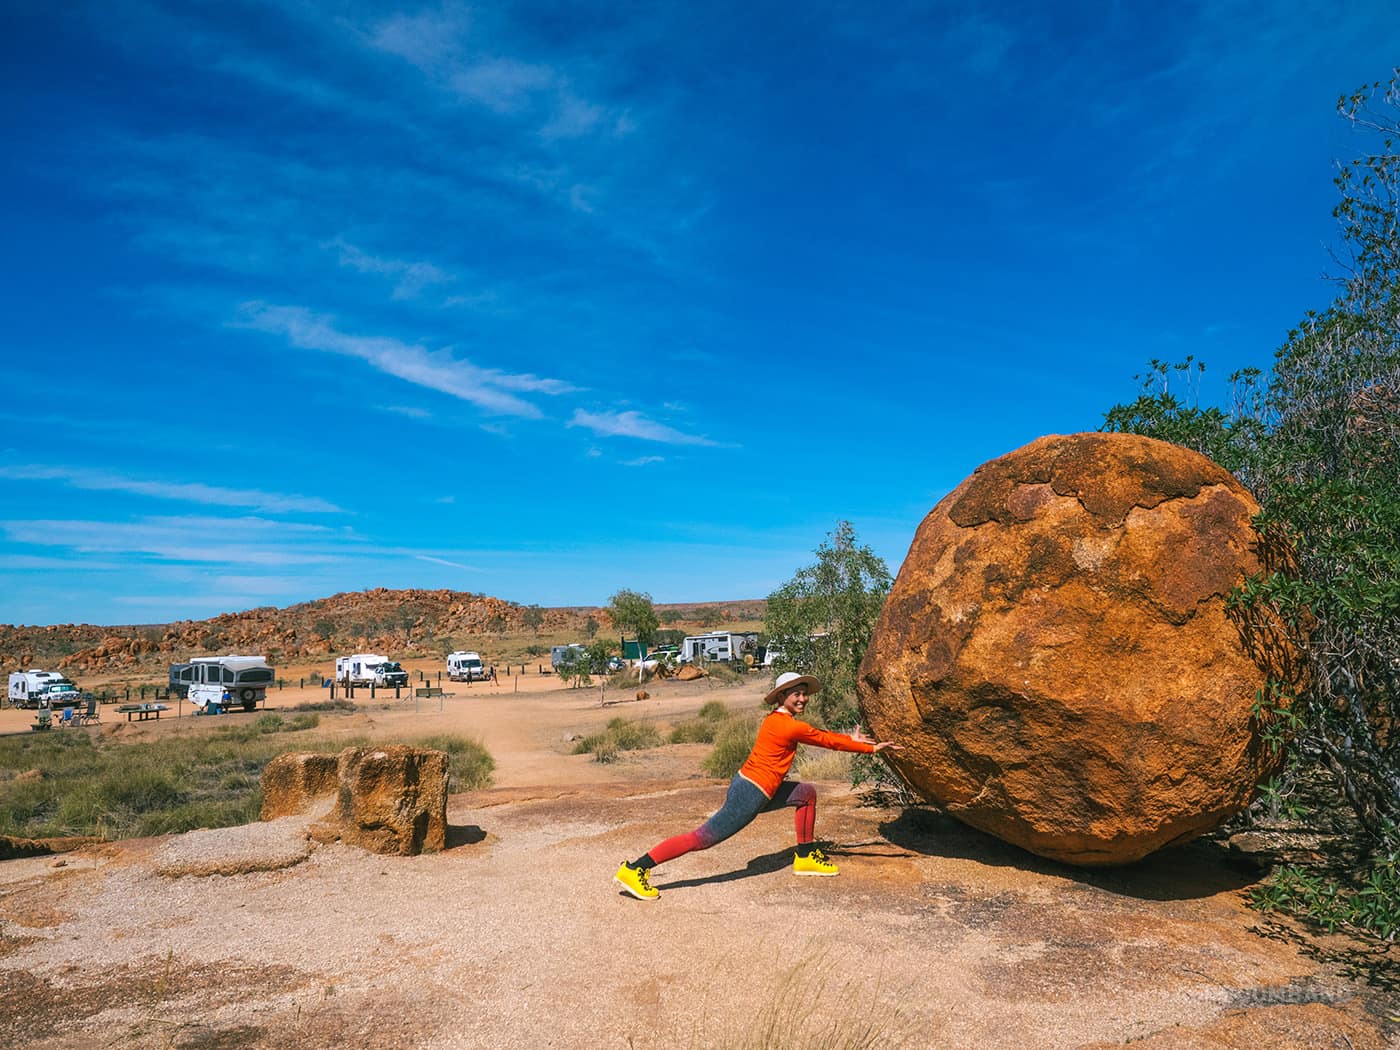 NT Australia - Karlu Karlu - E posing as if she's trying to move the boulder